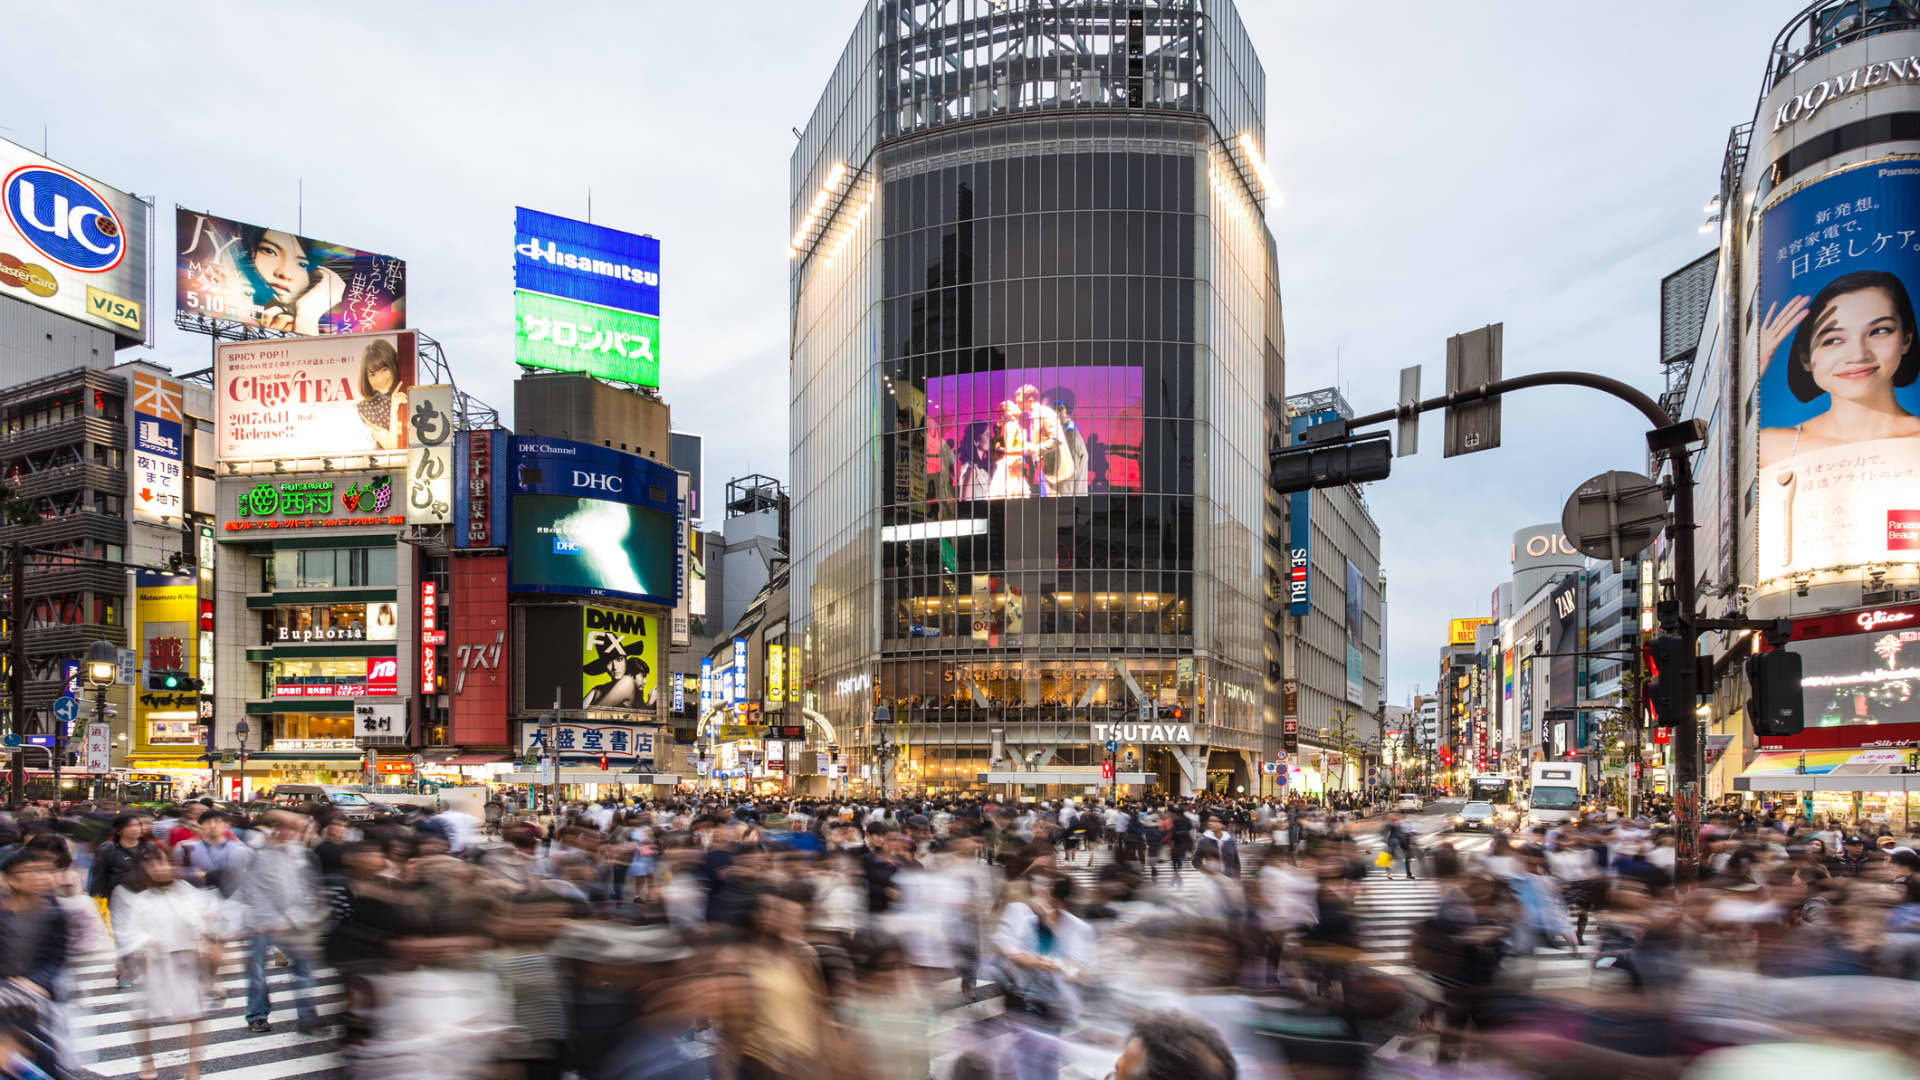 Crowds walk through Shibuya Crossing in Tokyo, Japan.